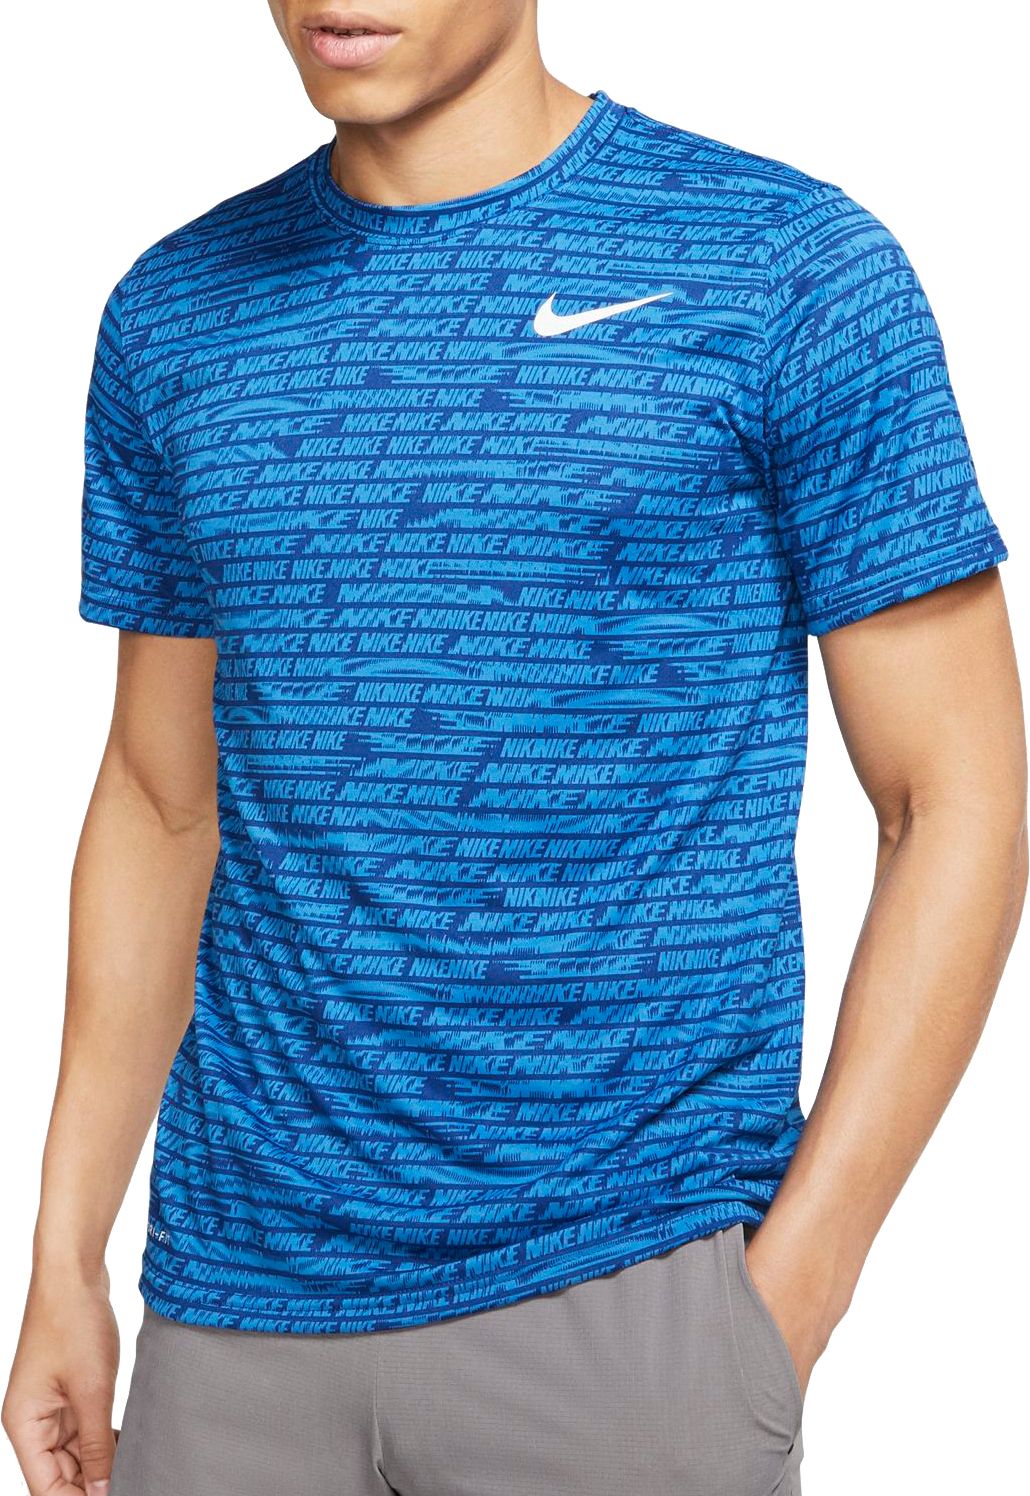 Nike Men's Training T-Shirt (Regular and Big & Tall) - .75